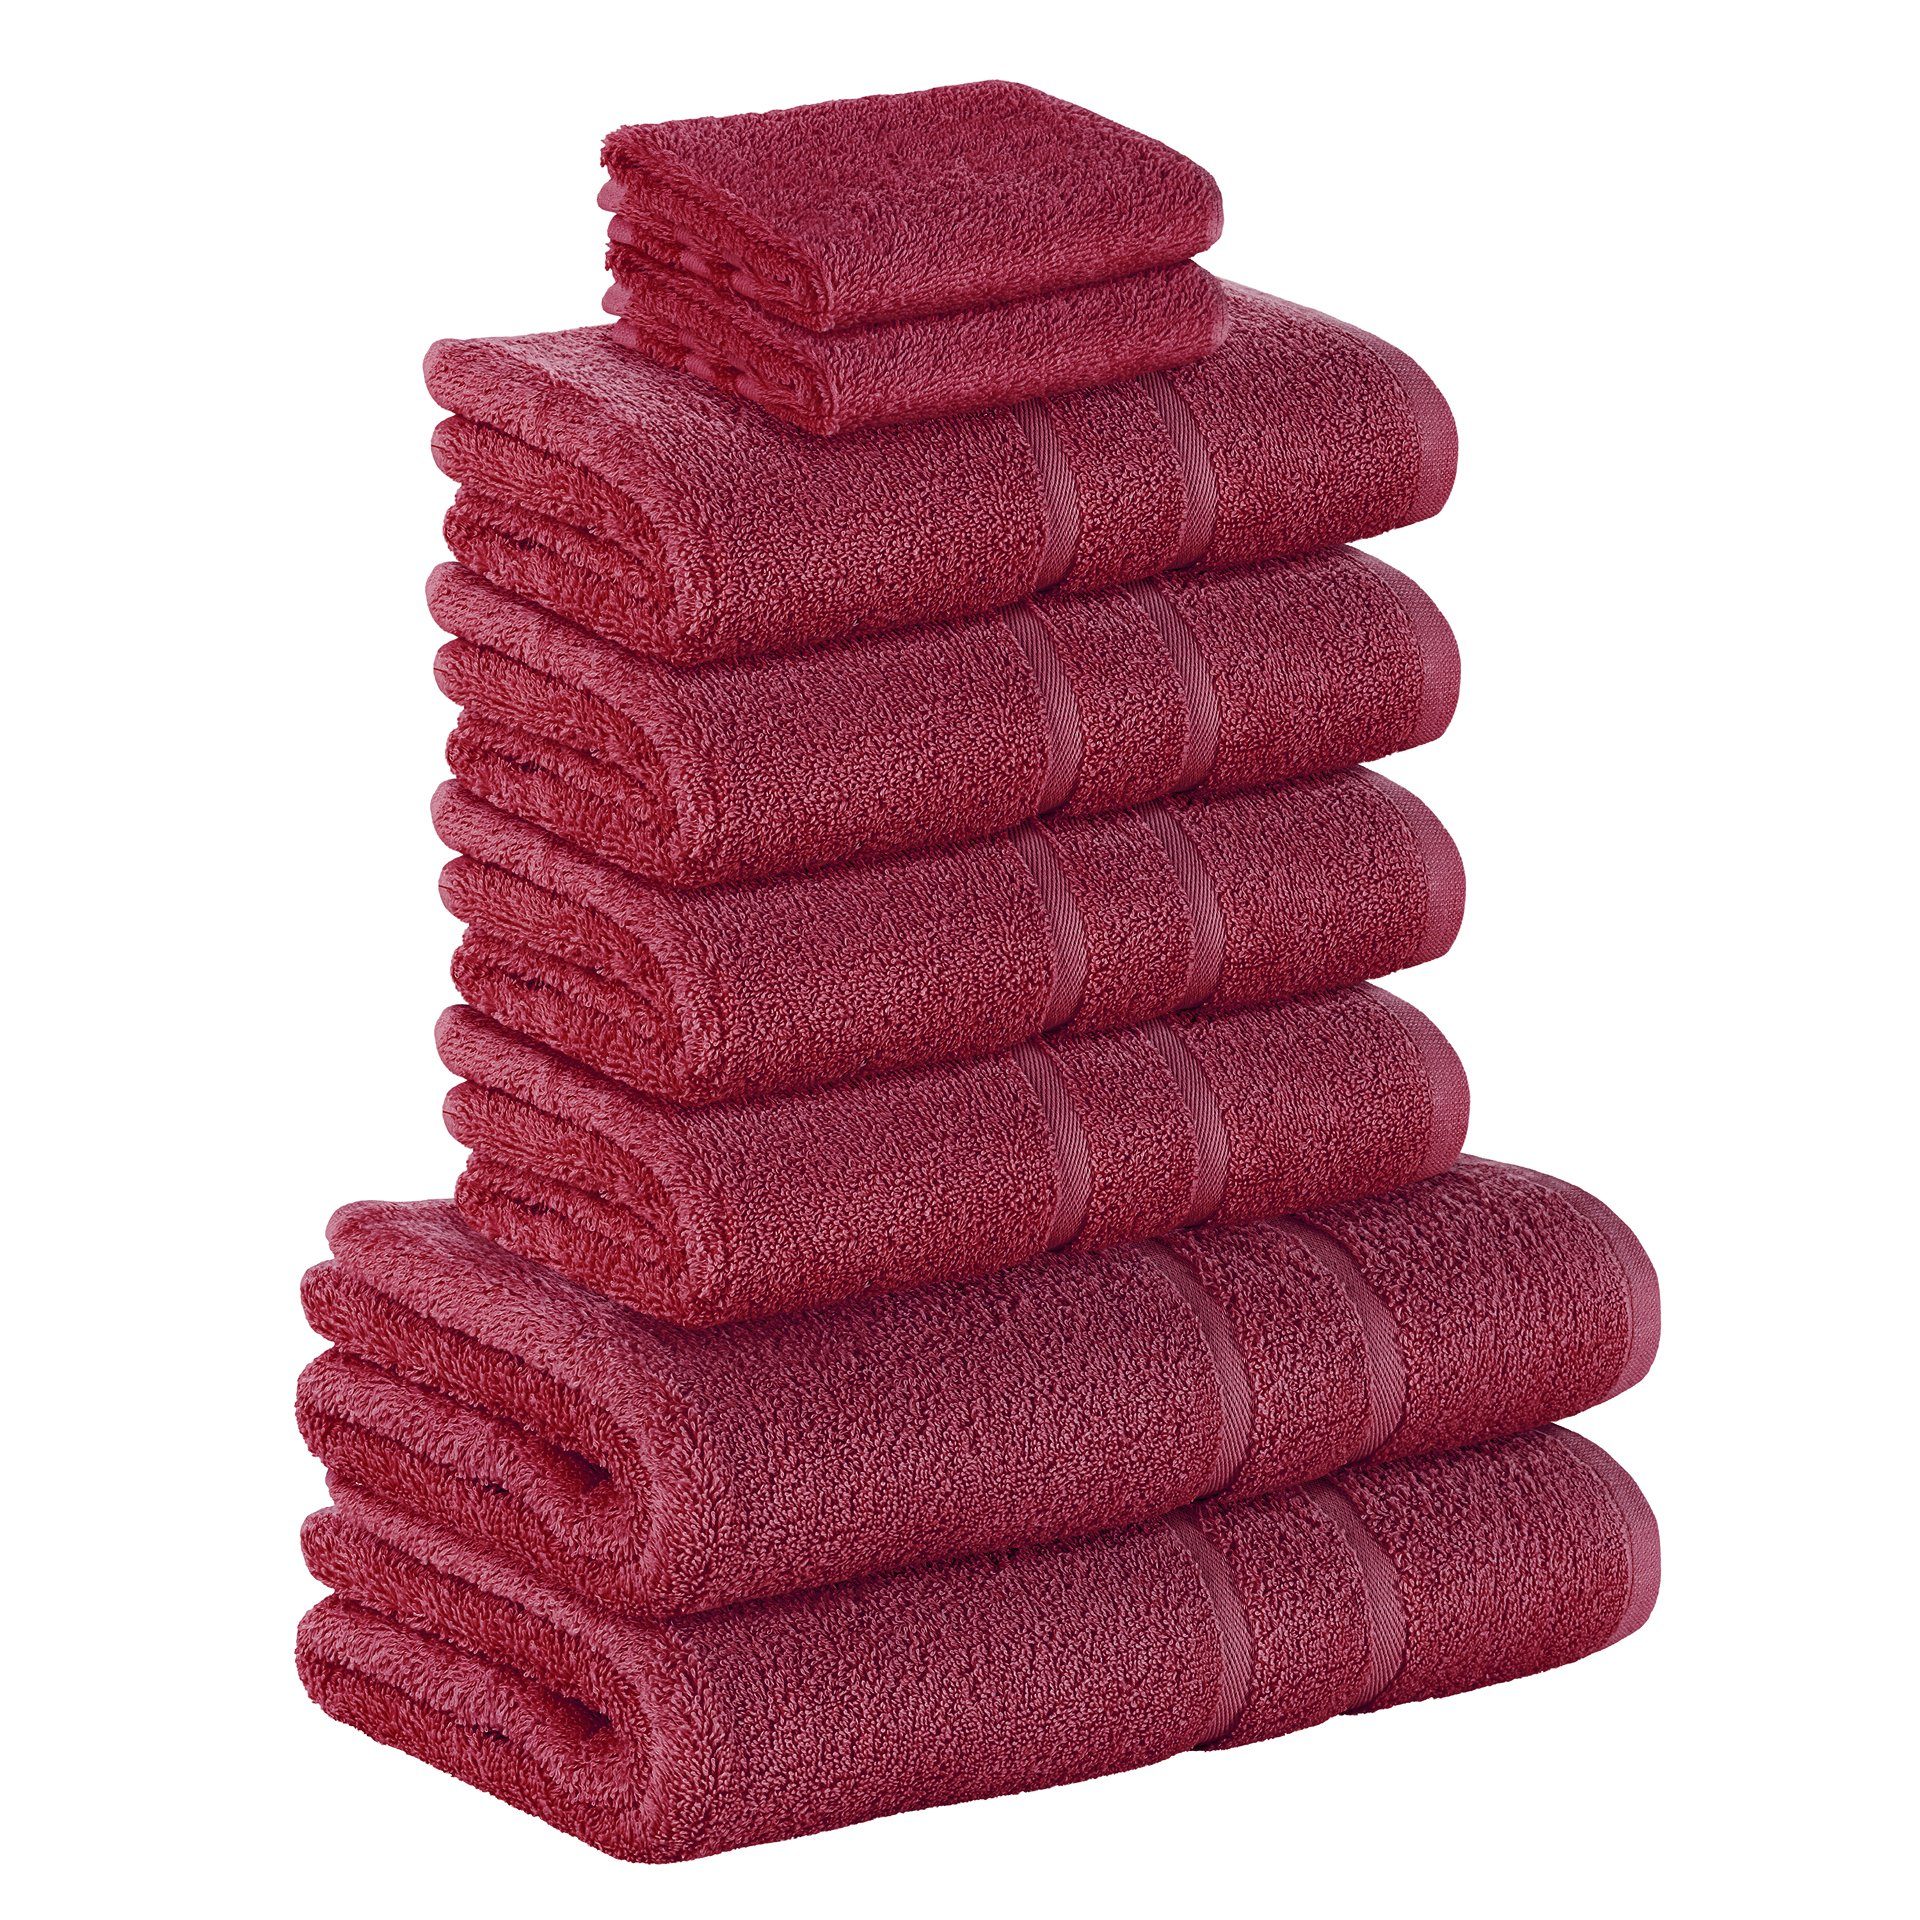 StickandShine Handtuch Set 2x Gästehandtuch 4x Handtücher 2x Duschtücher als SET in verschiedenen Farben (8 Teilig) 100% Baumwolle 500 GSM Frottee 8er Handtuch Pack, 100% Baumwolle 500 GSM Bordeaux